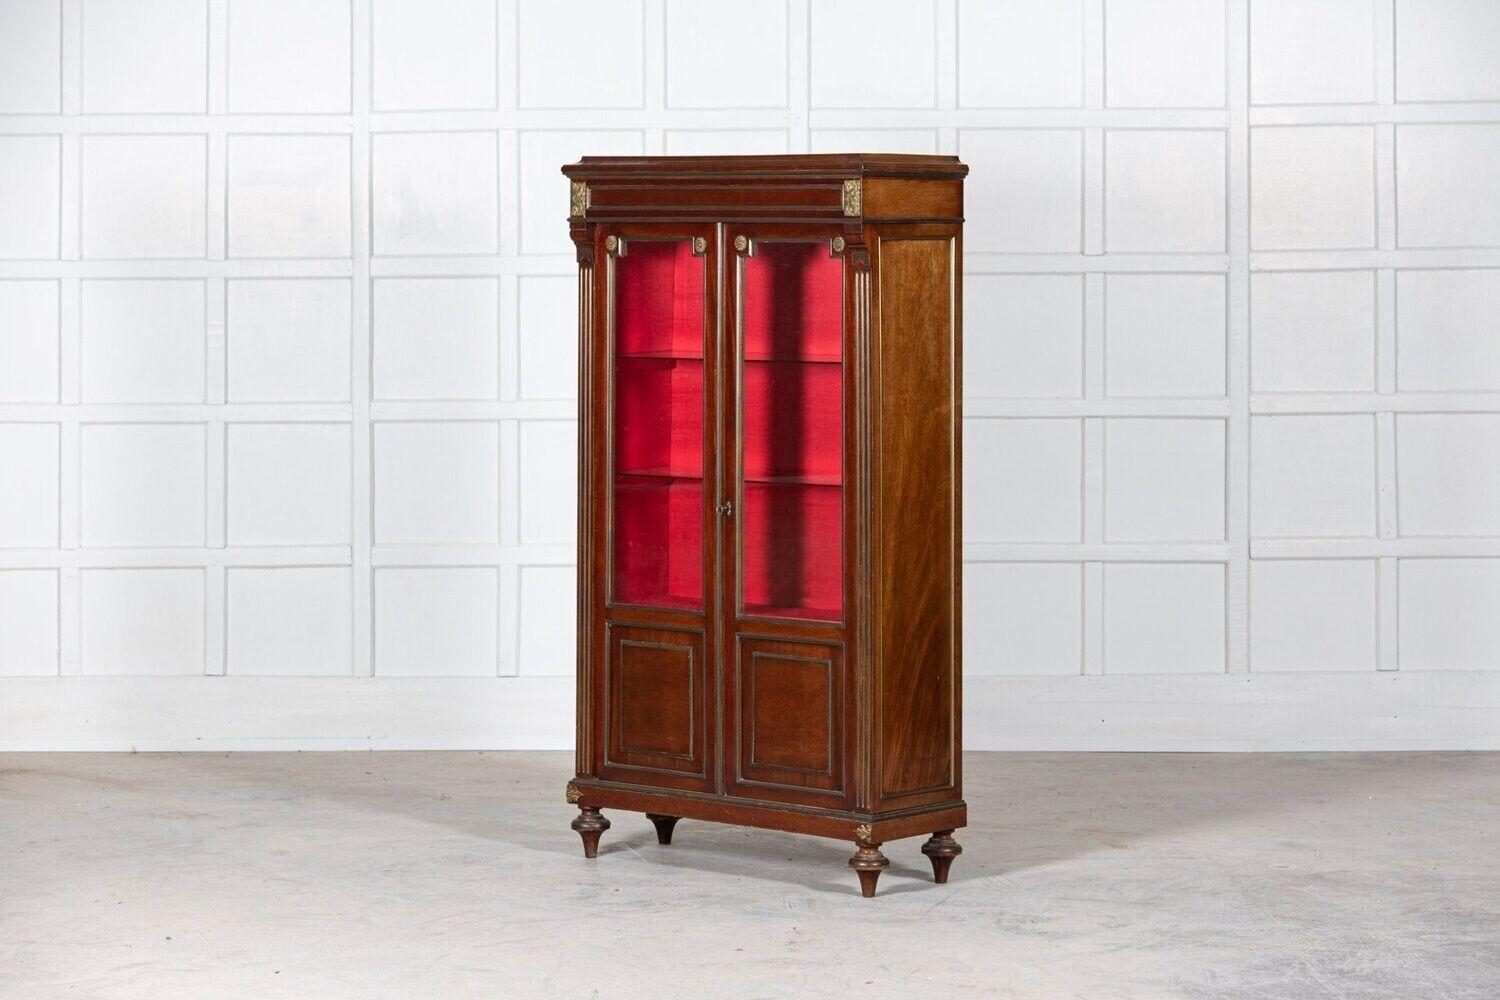 circa 1890.
19th C French gilt mahogany glazed vitrine.
sku 1179.
Measures: W94 x D37 x H164cm.